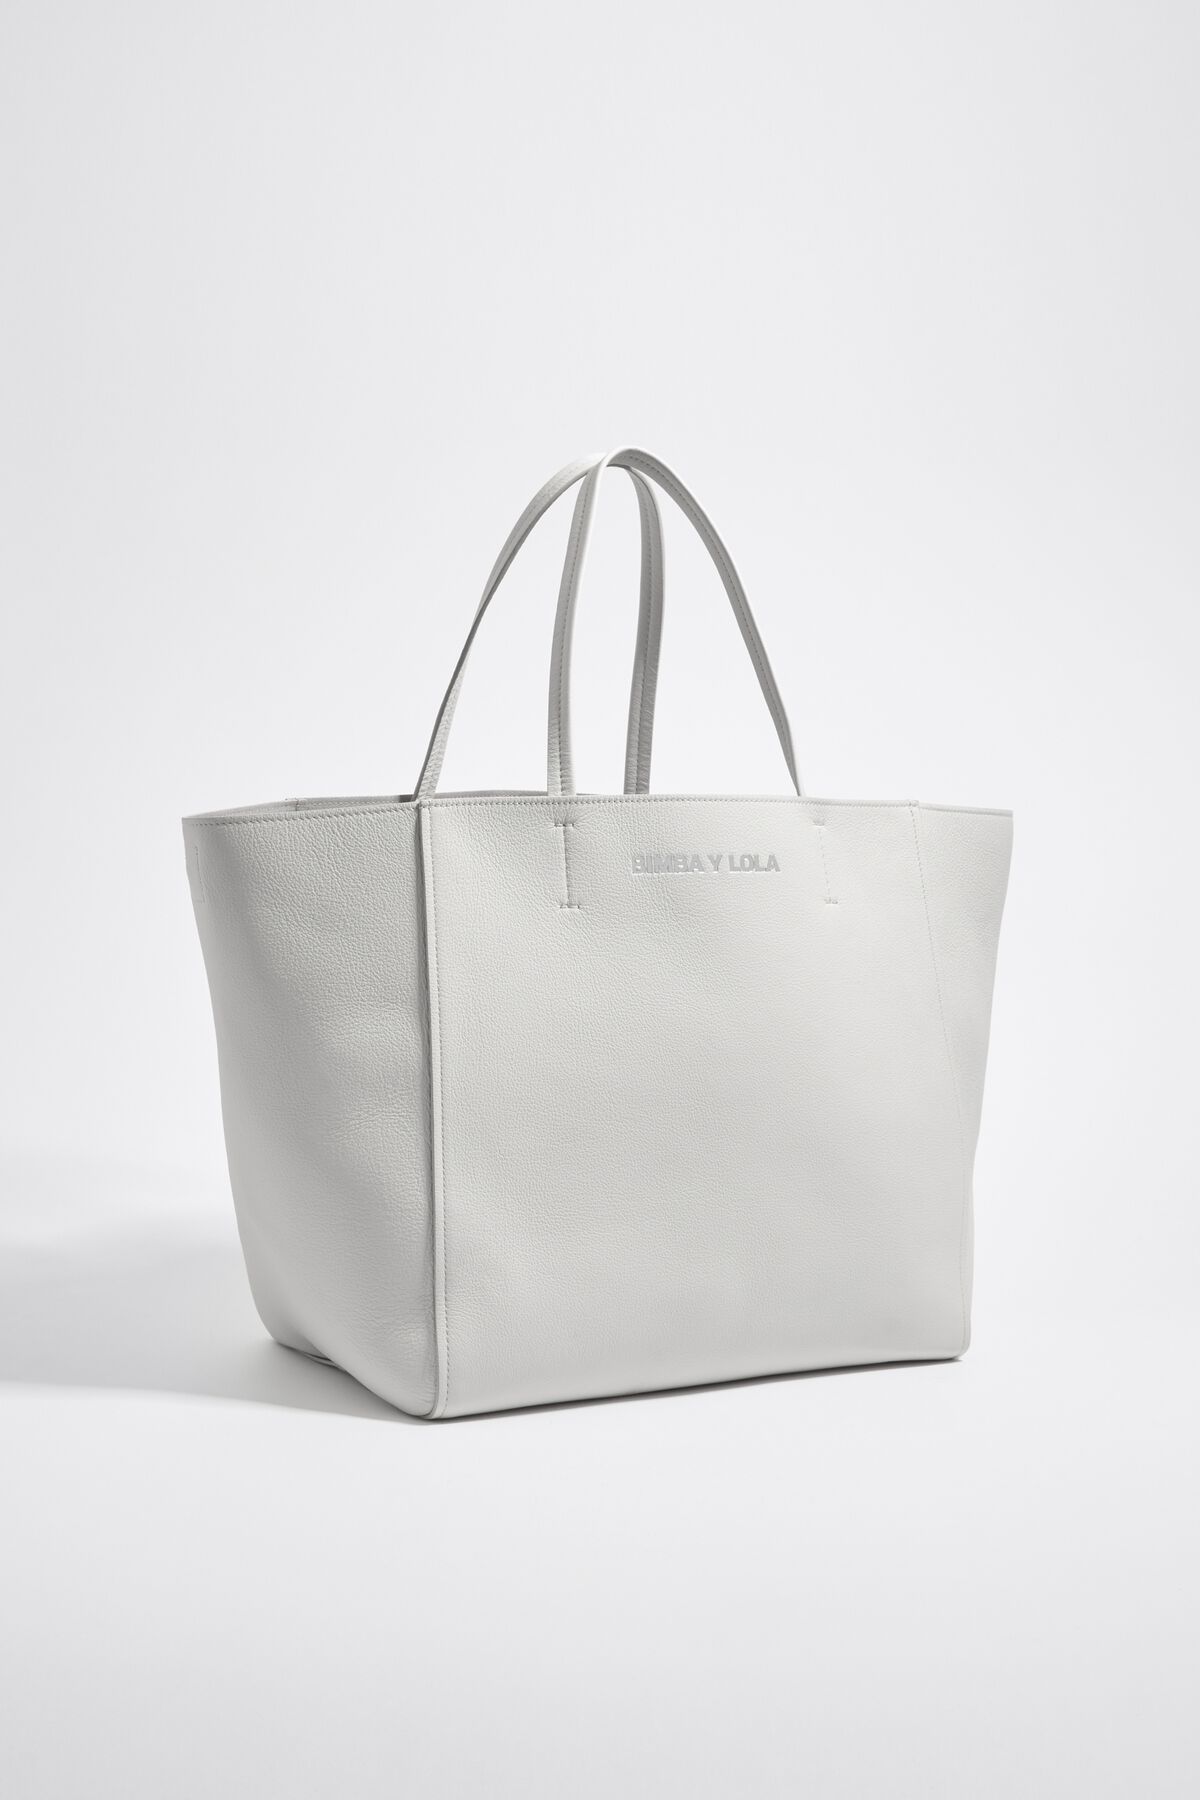 Bimba Y Lola Logo-print Leather Sling Bag In White